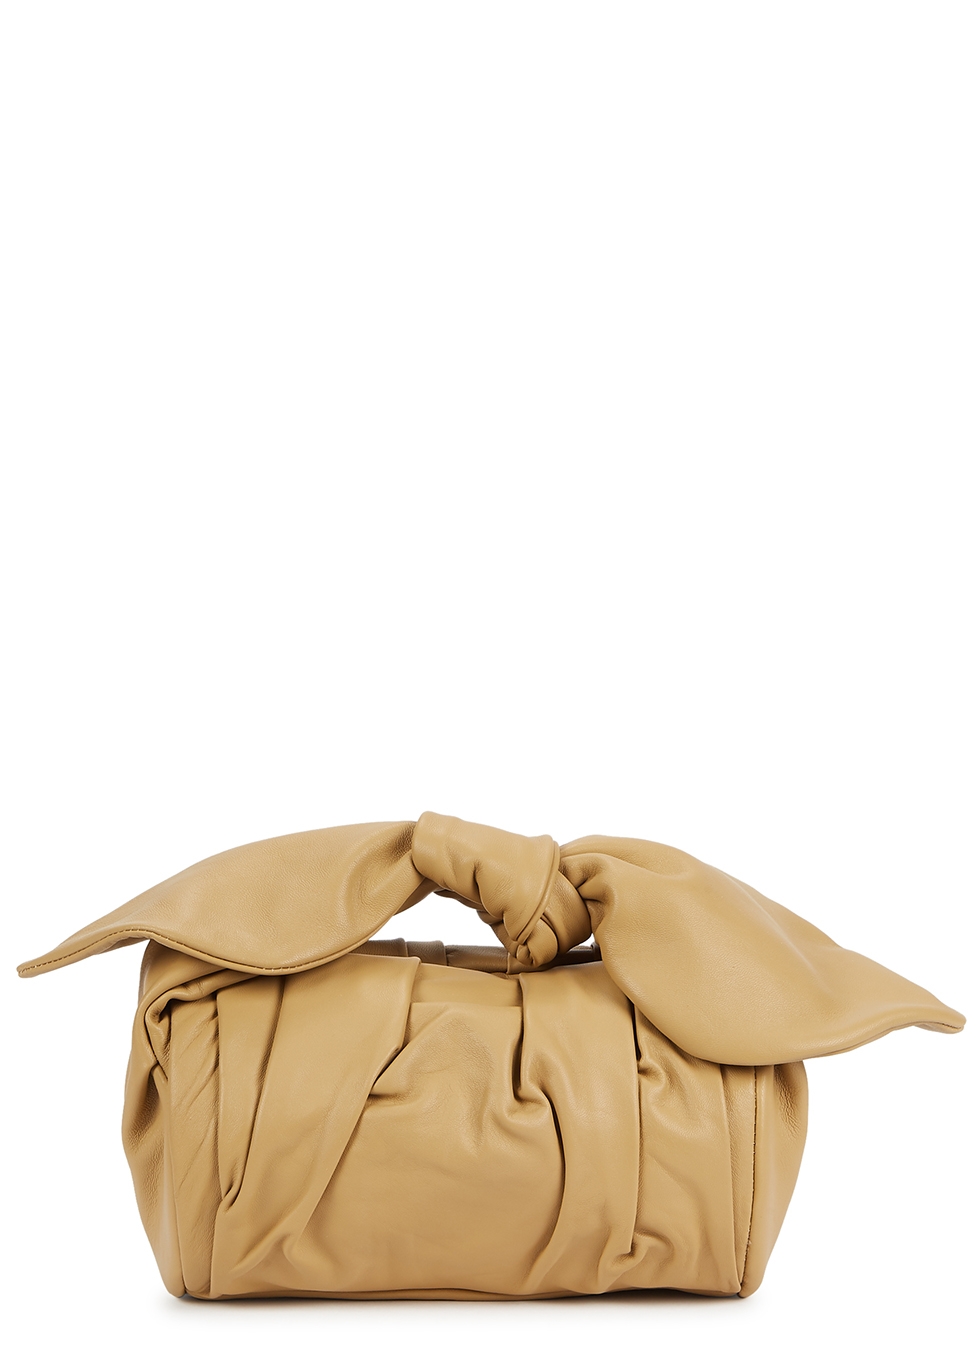 Nane camel leather clutch